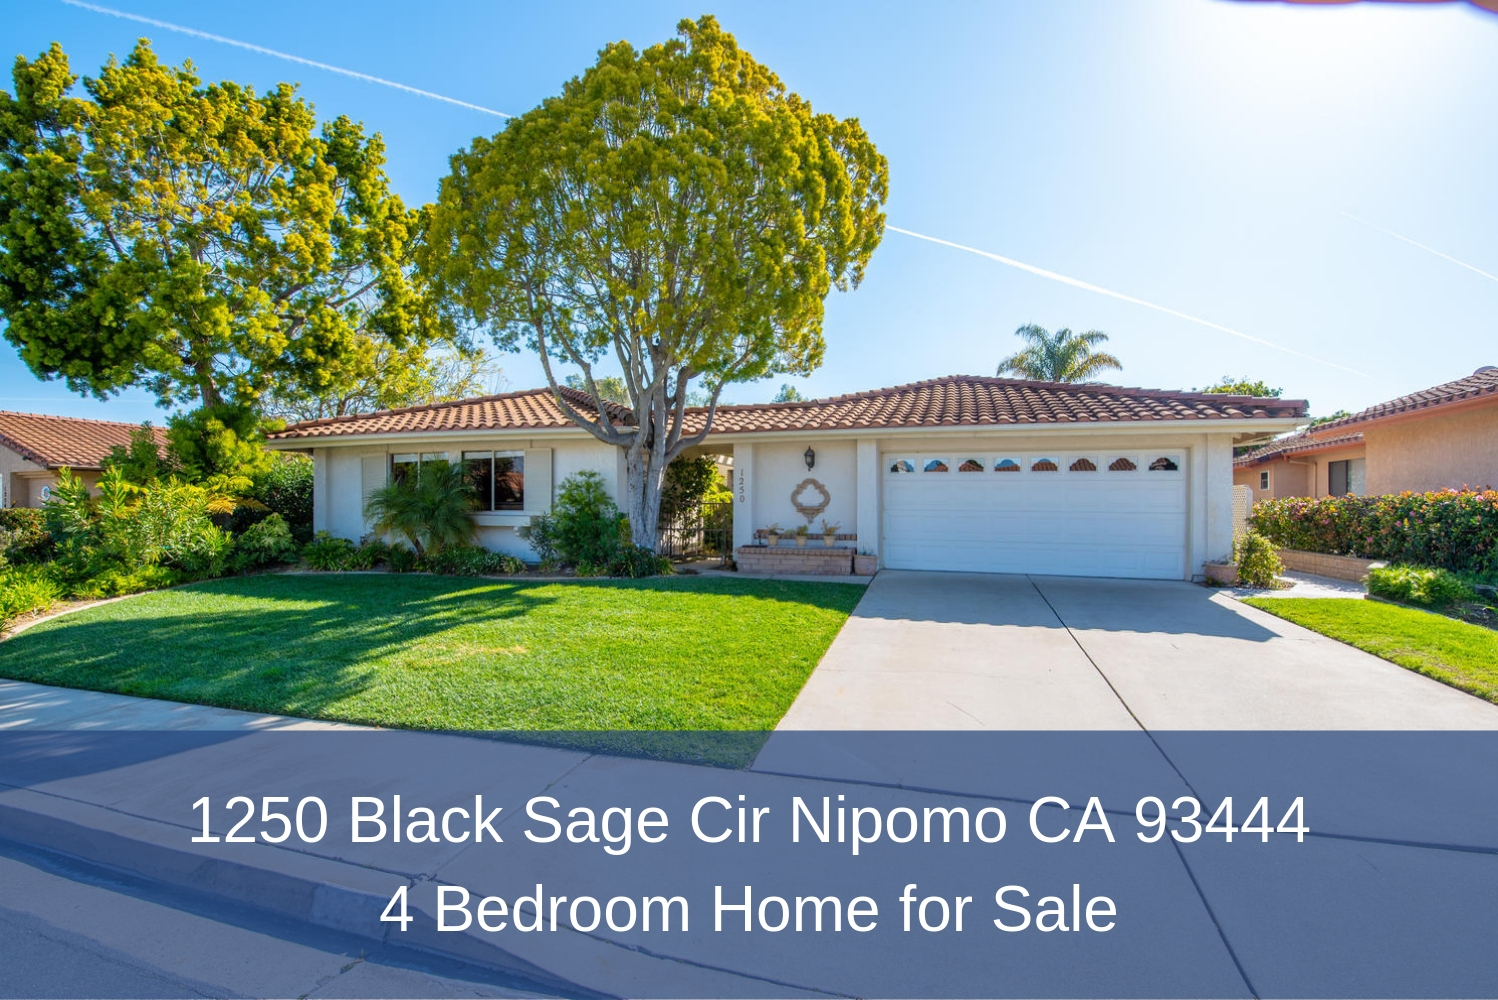 1250-Black-Sage-Cir-Nipomo-CA-93444-4-Bedroom-Home-Sale.jpg